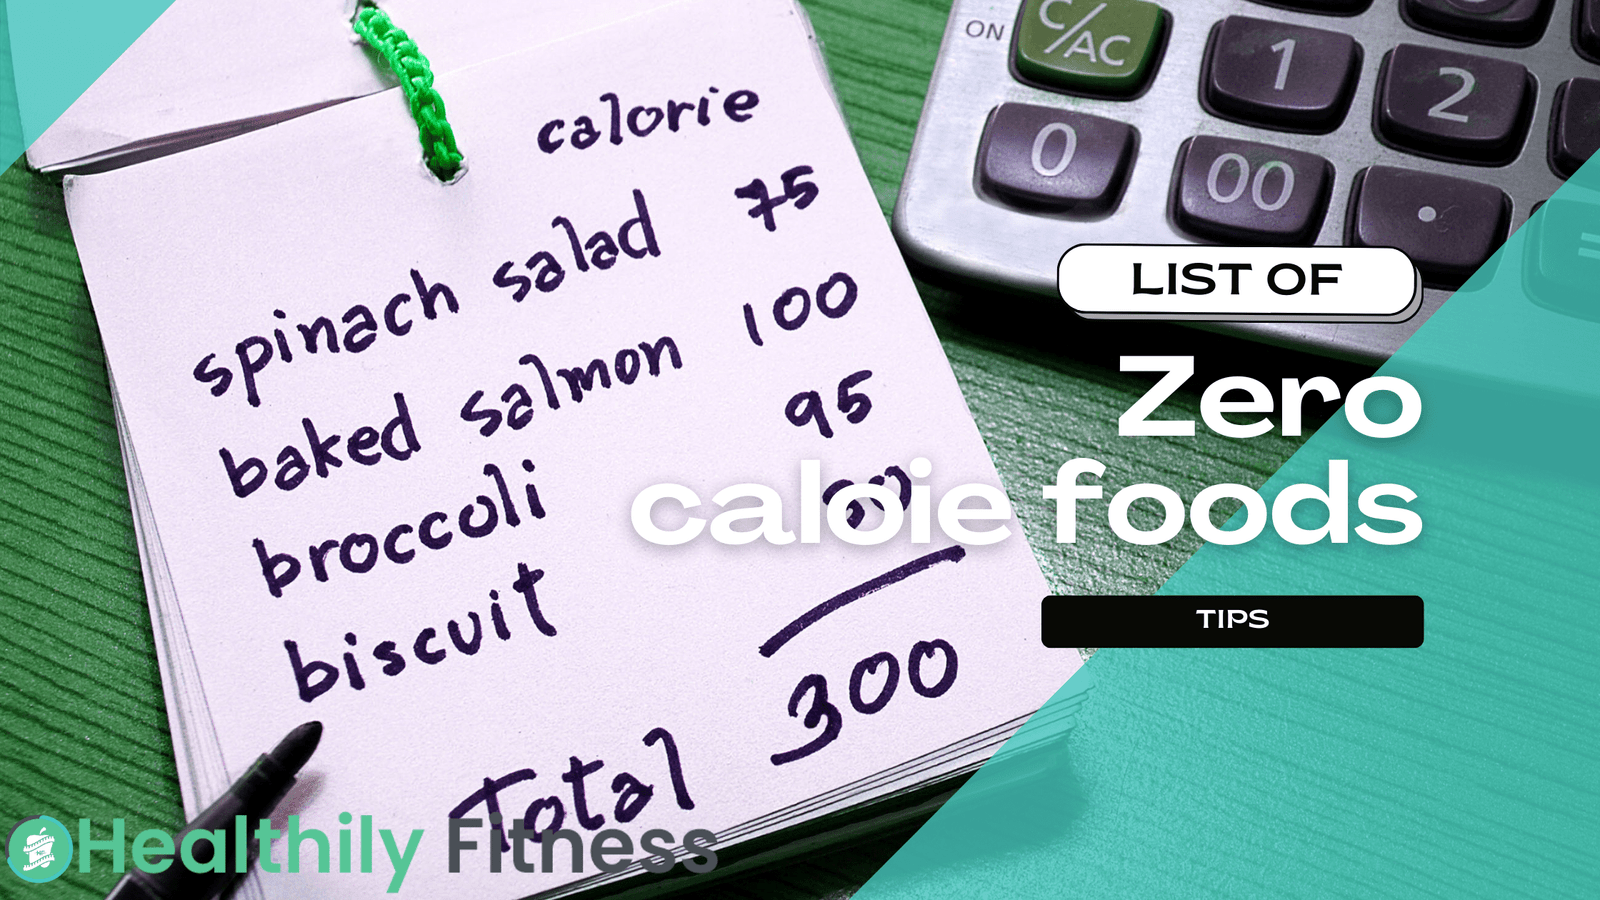 List of Zero calorie foods